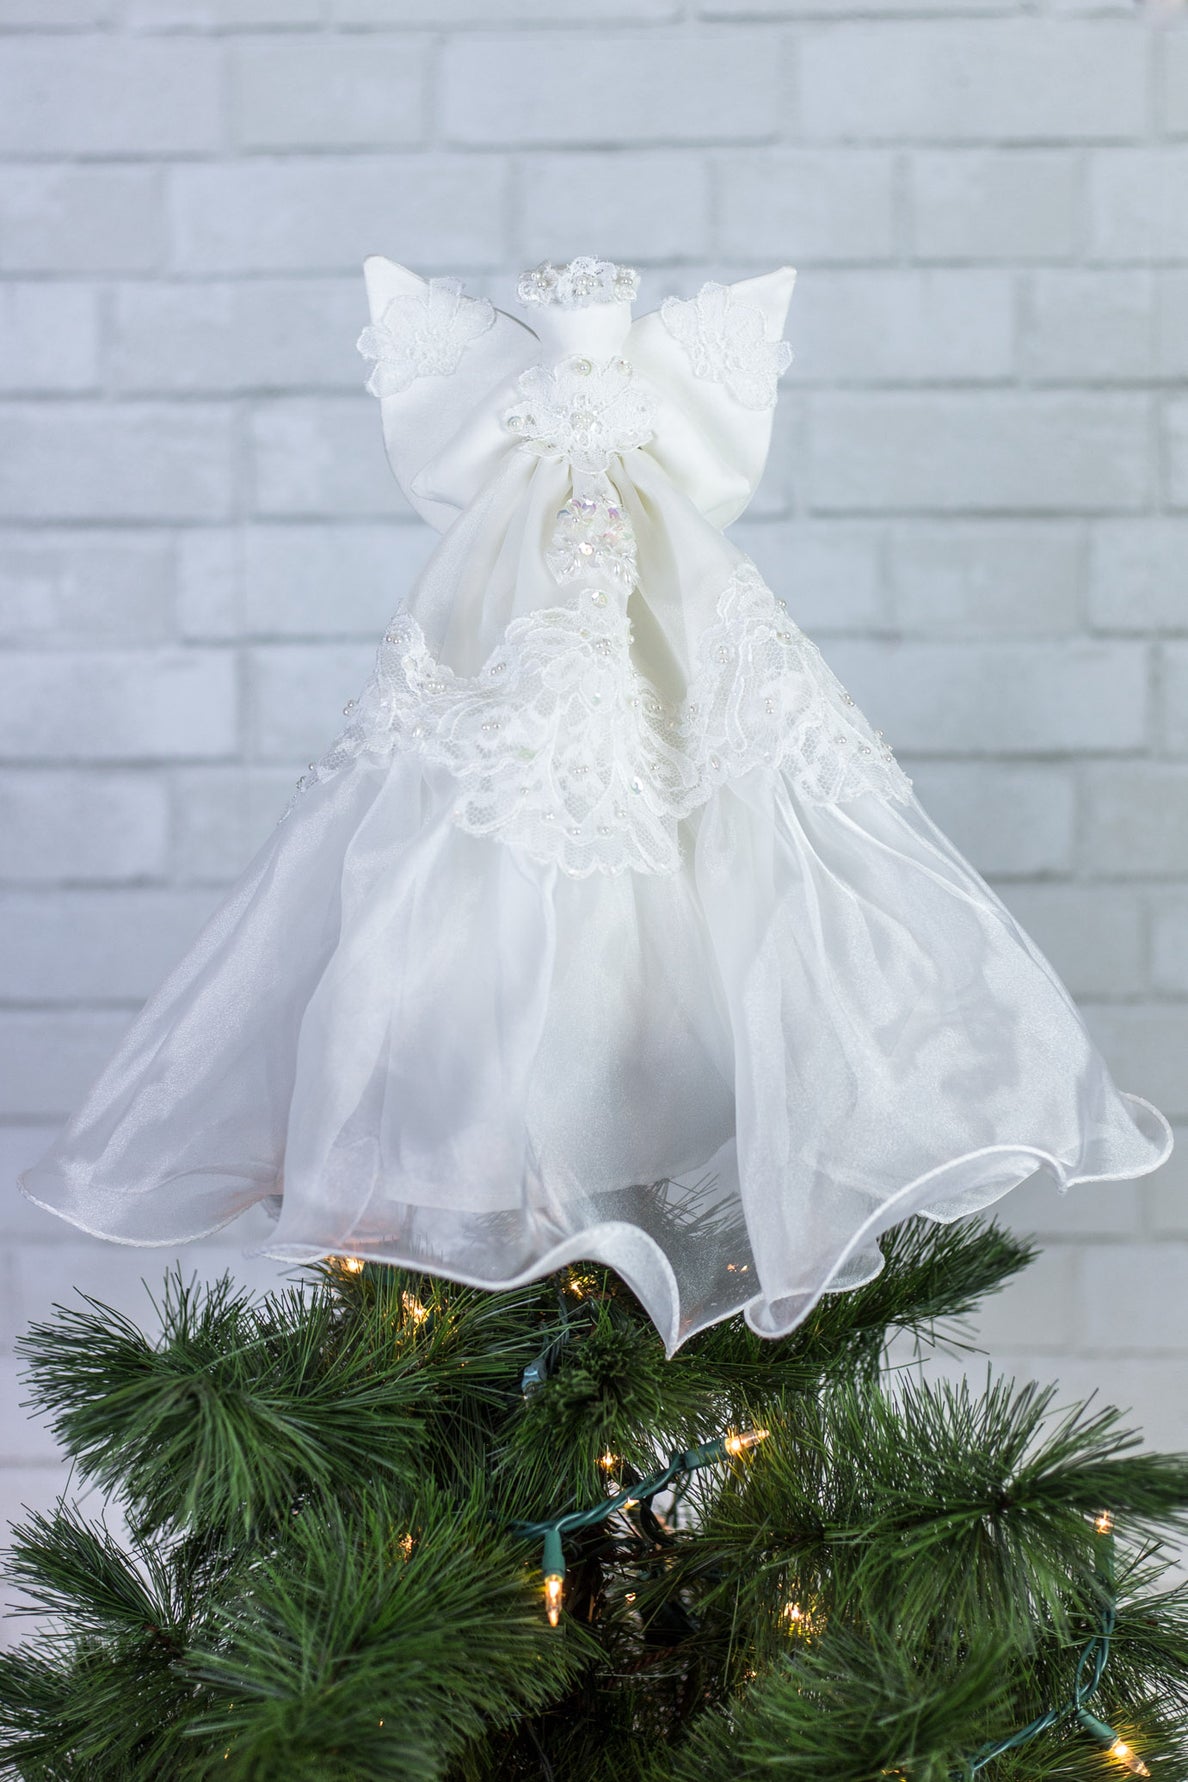 Wedding Dress Made Into Guardian Angel Tree Topper